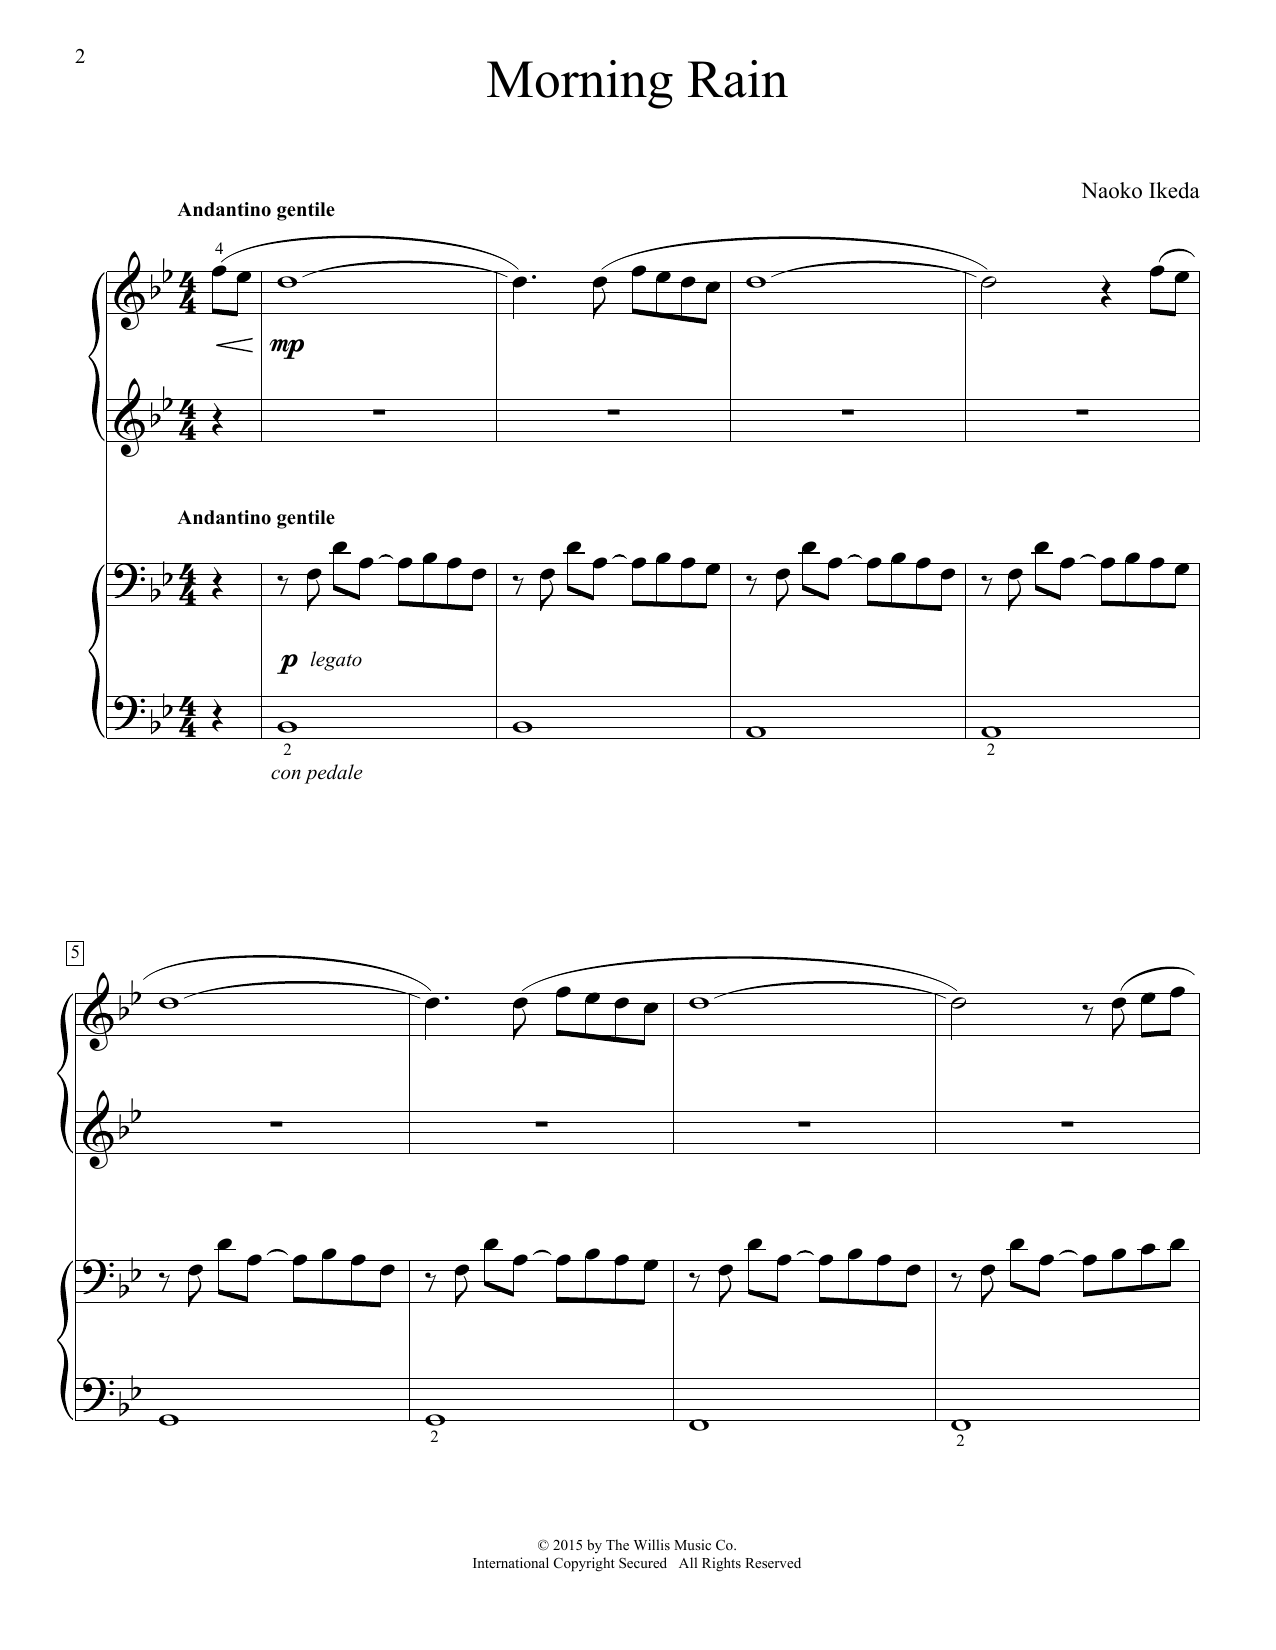 Naoko Ikeda Morning Rain Sheet Music Notes & Chords for Piano Duet - Download or Print PDF